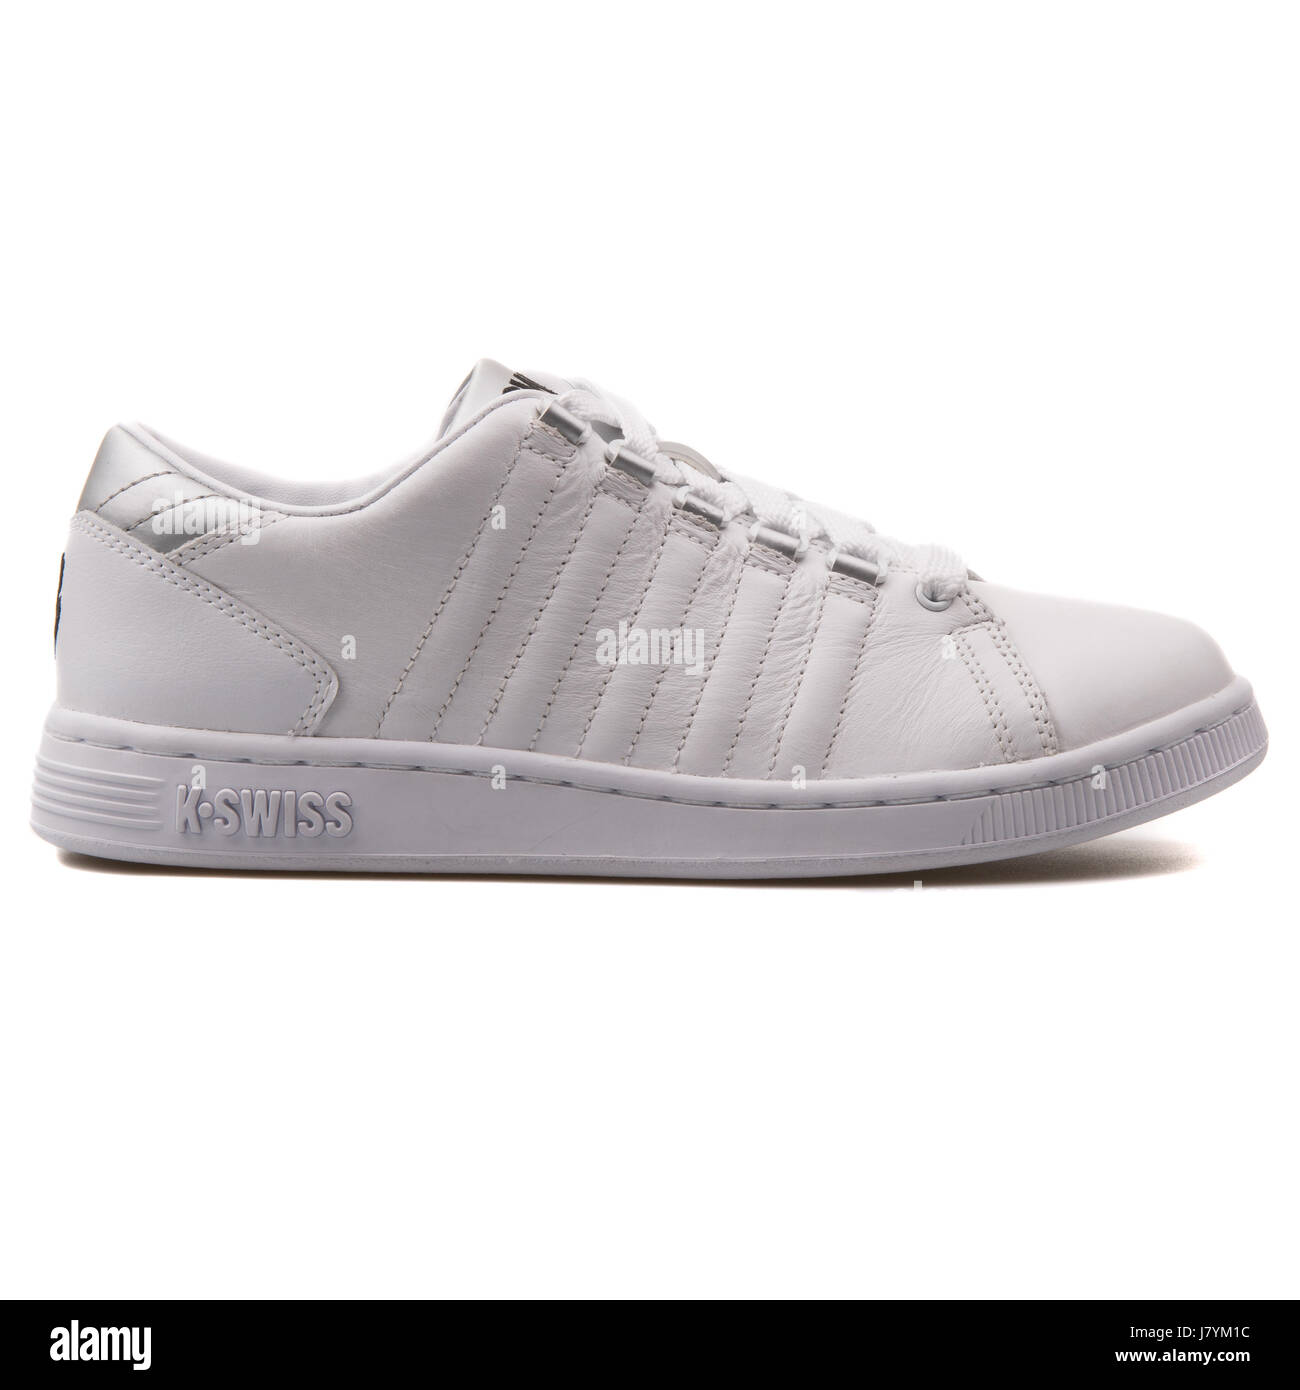 K-Swiss Lozan III White and Silver Women's Sports Sneakers - 93212-115-M Stock Photo